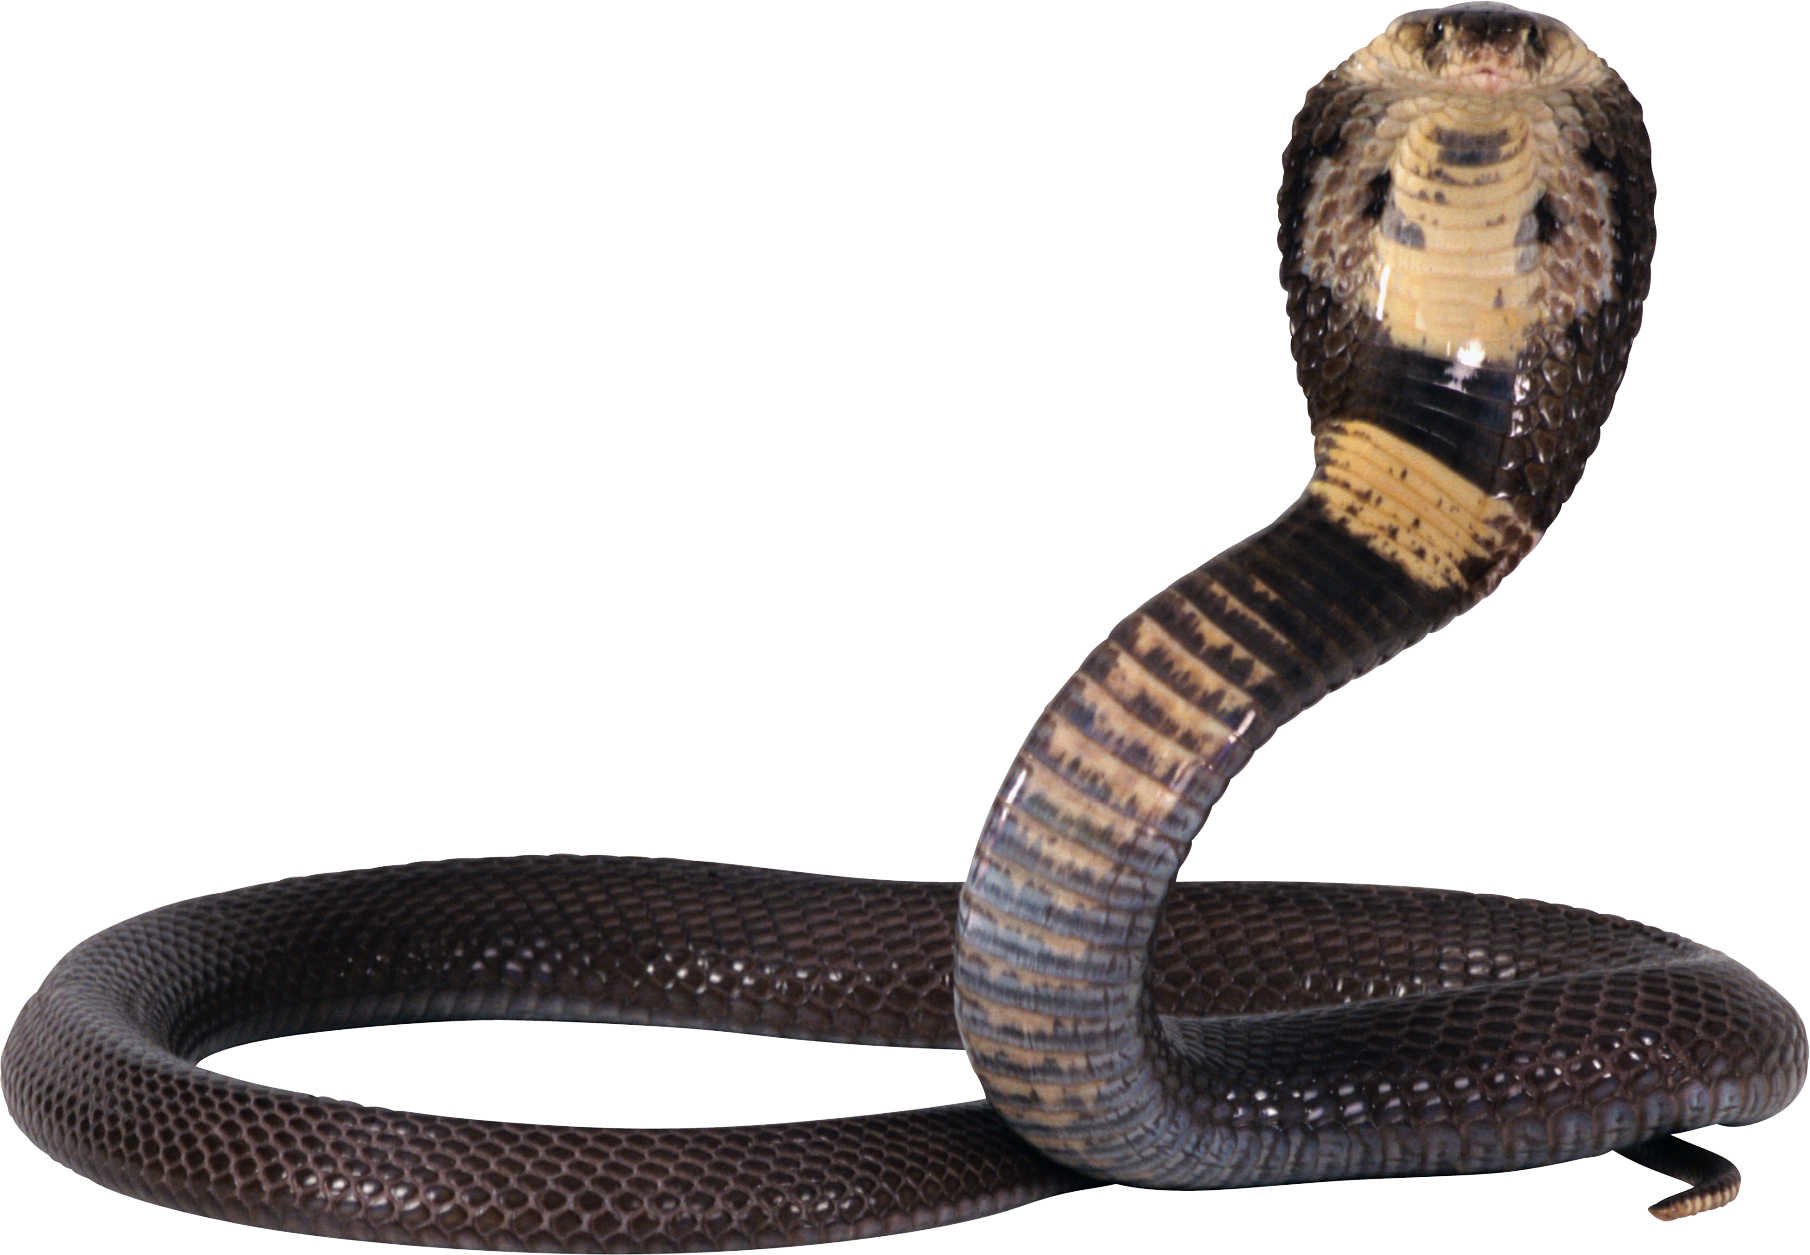 Clipart snake wild animal. Cobra png image free